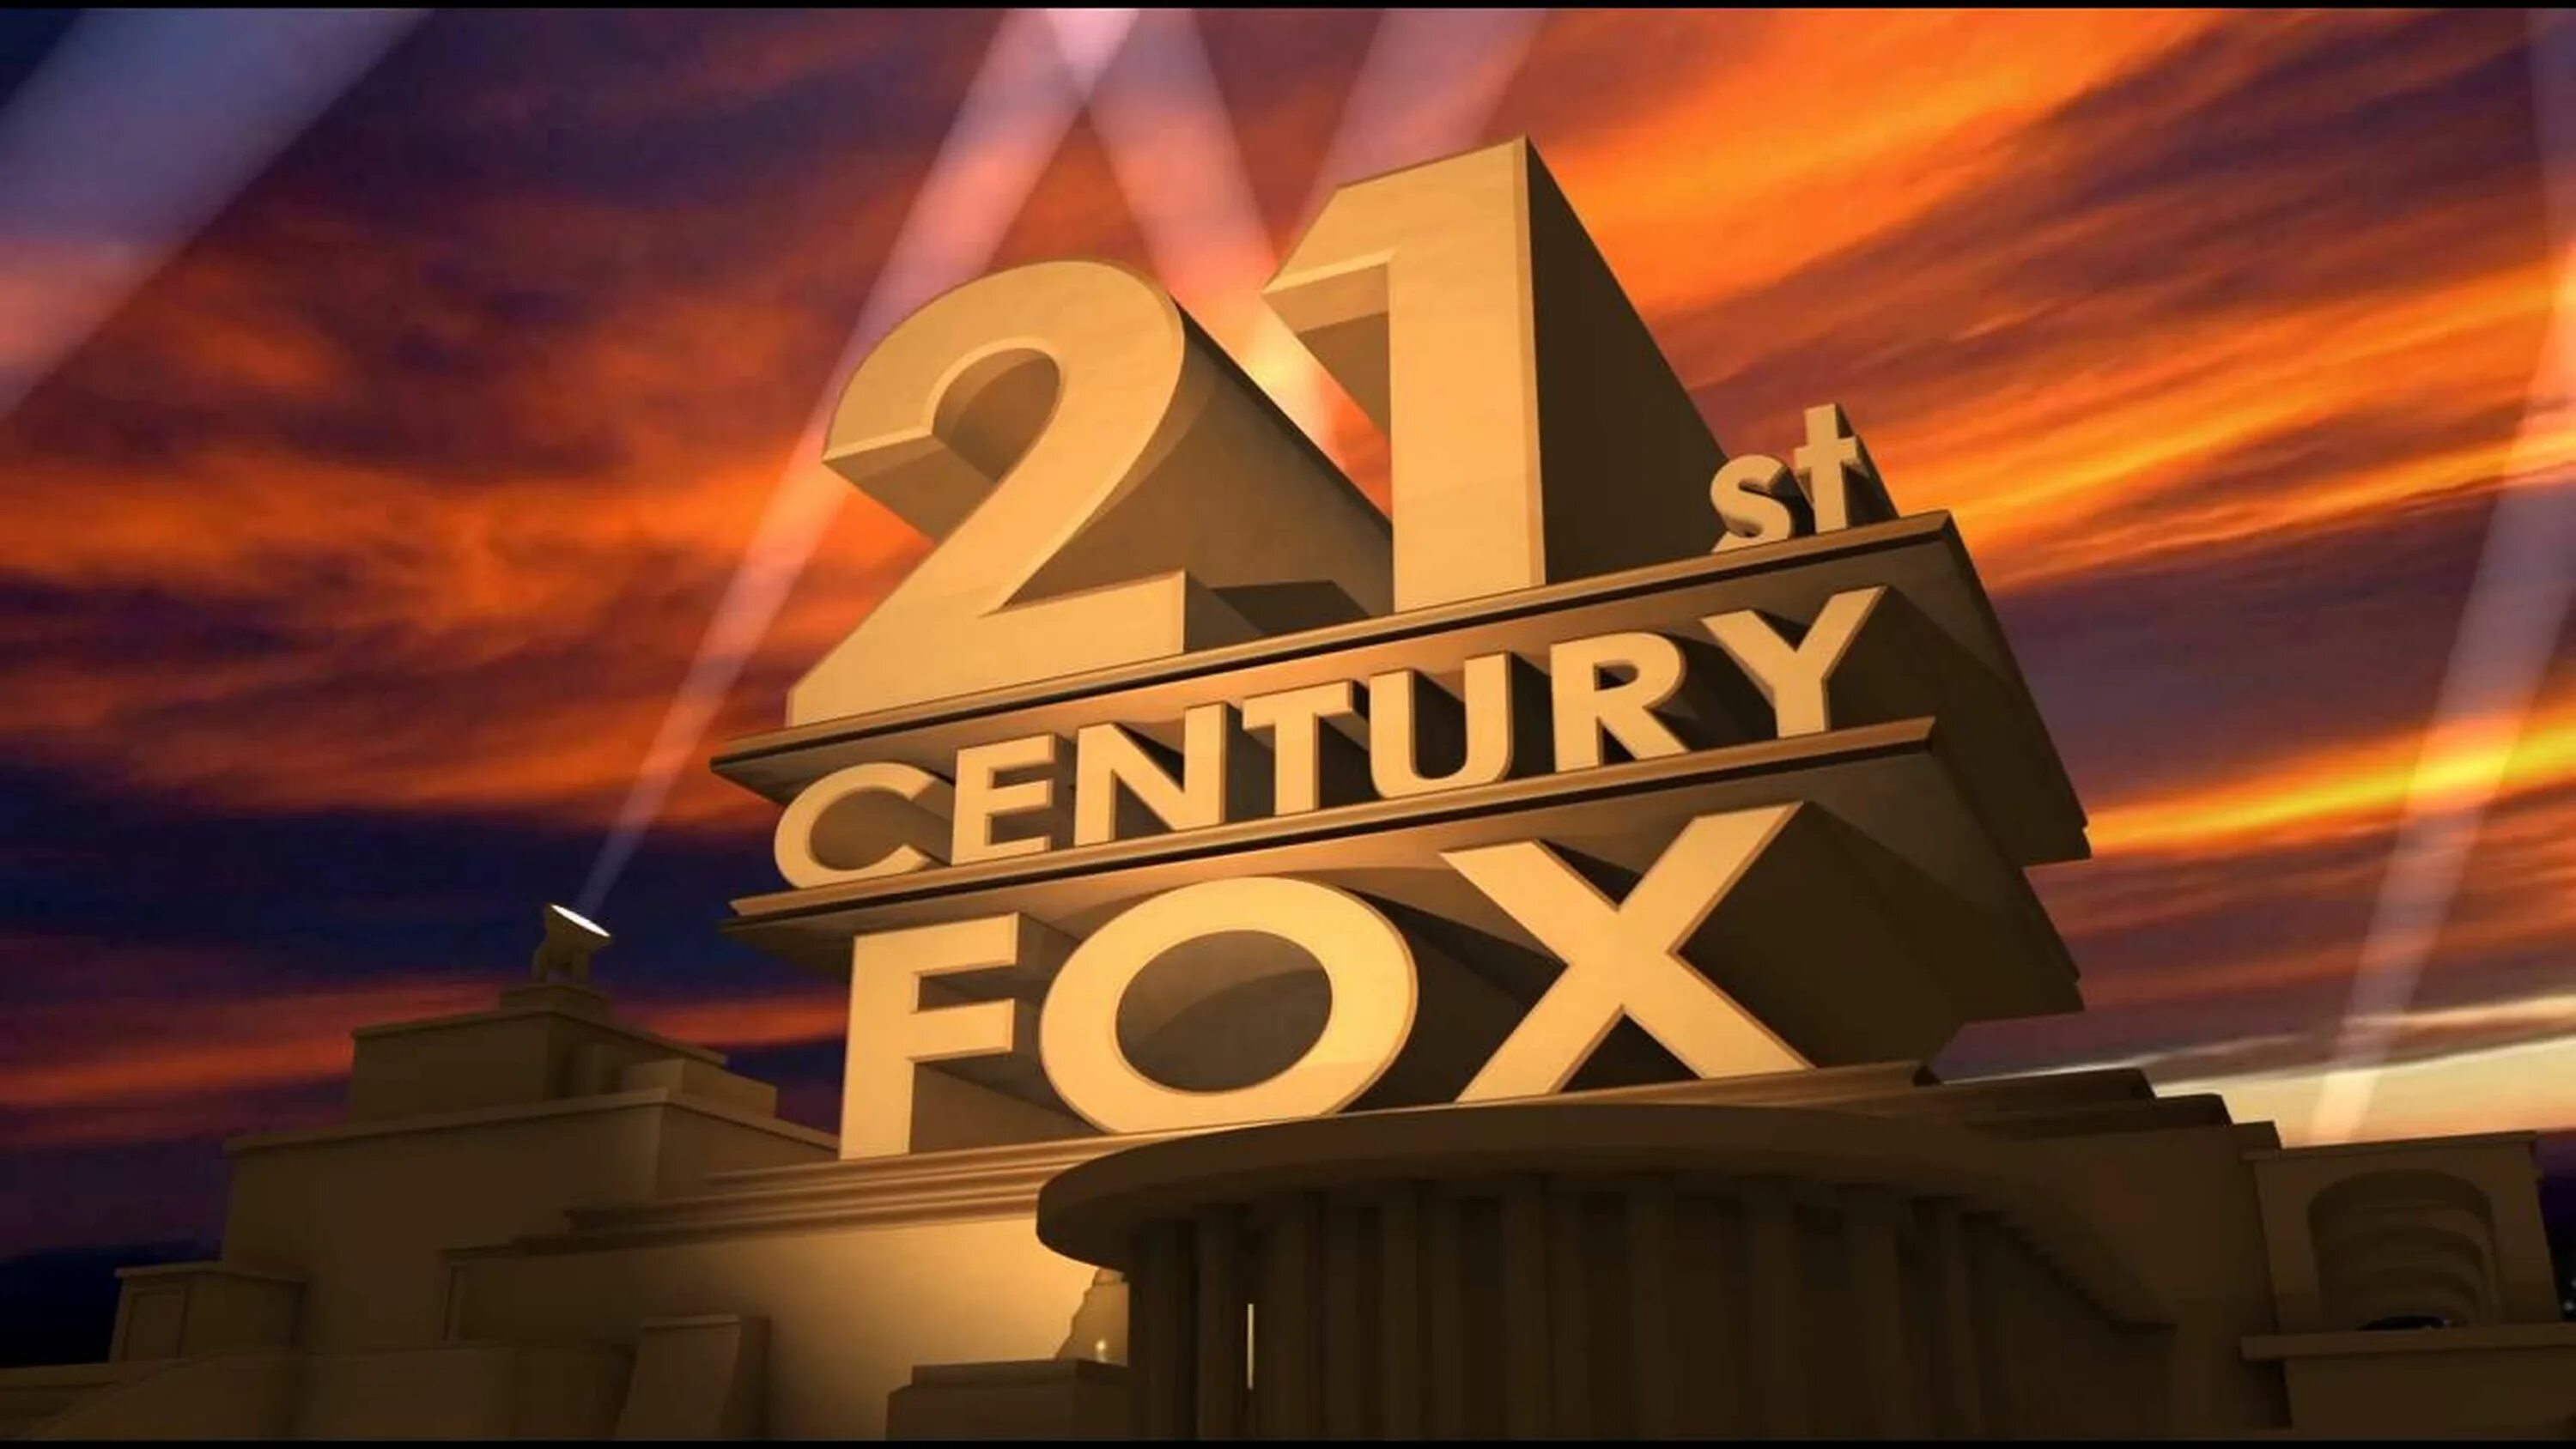 Walt Disney Fox 21 Century. 21st Century Fox проекты. С юбилеем 20 век Фокс. Заставка с юбилеем.